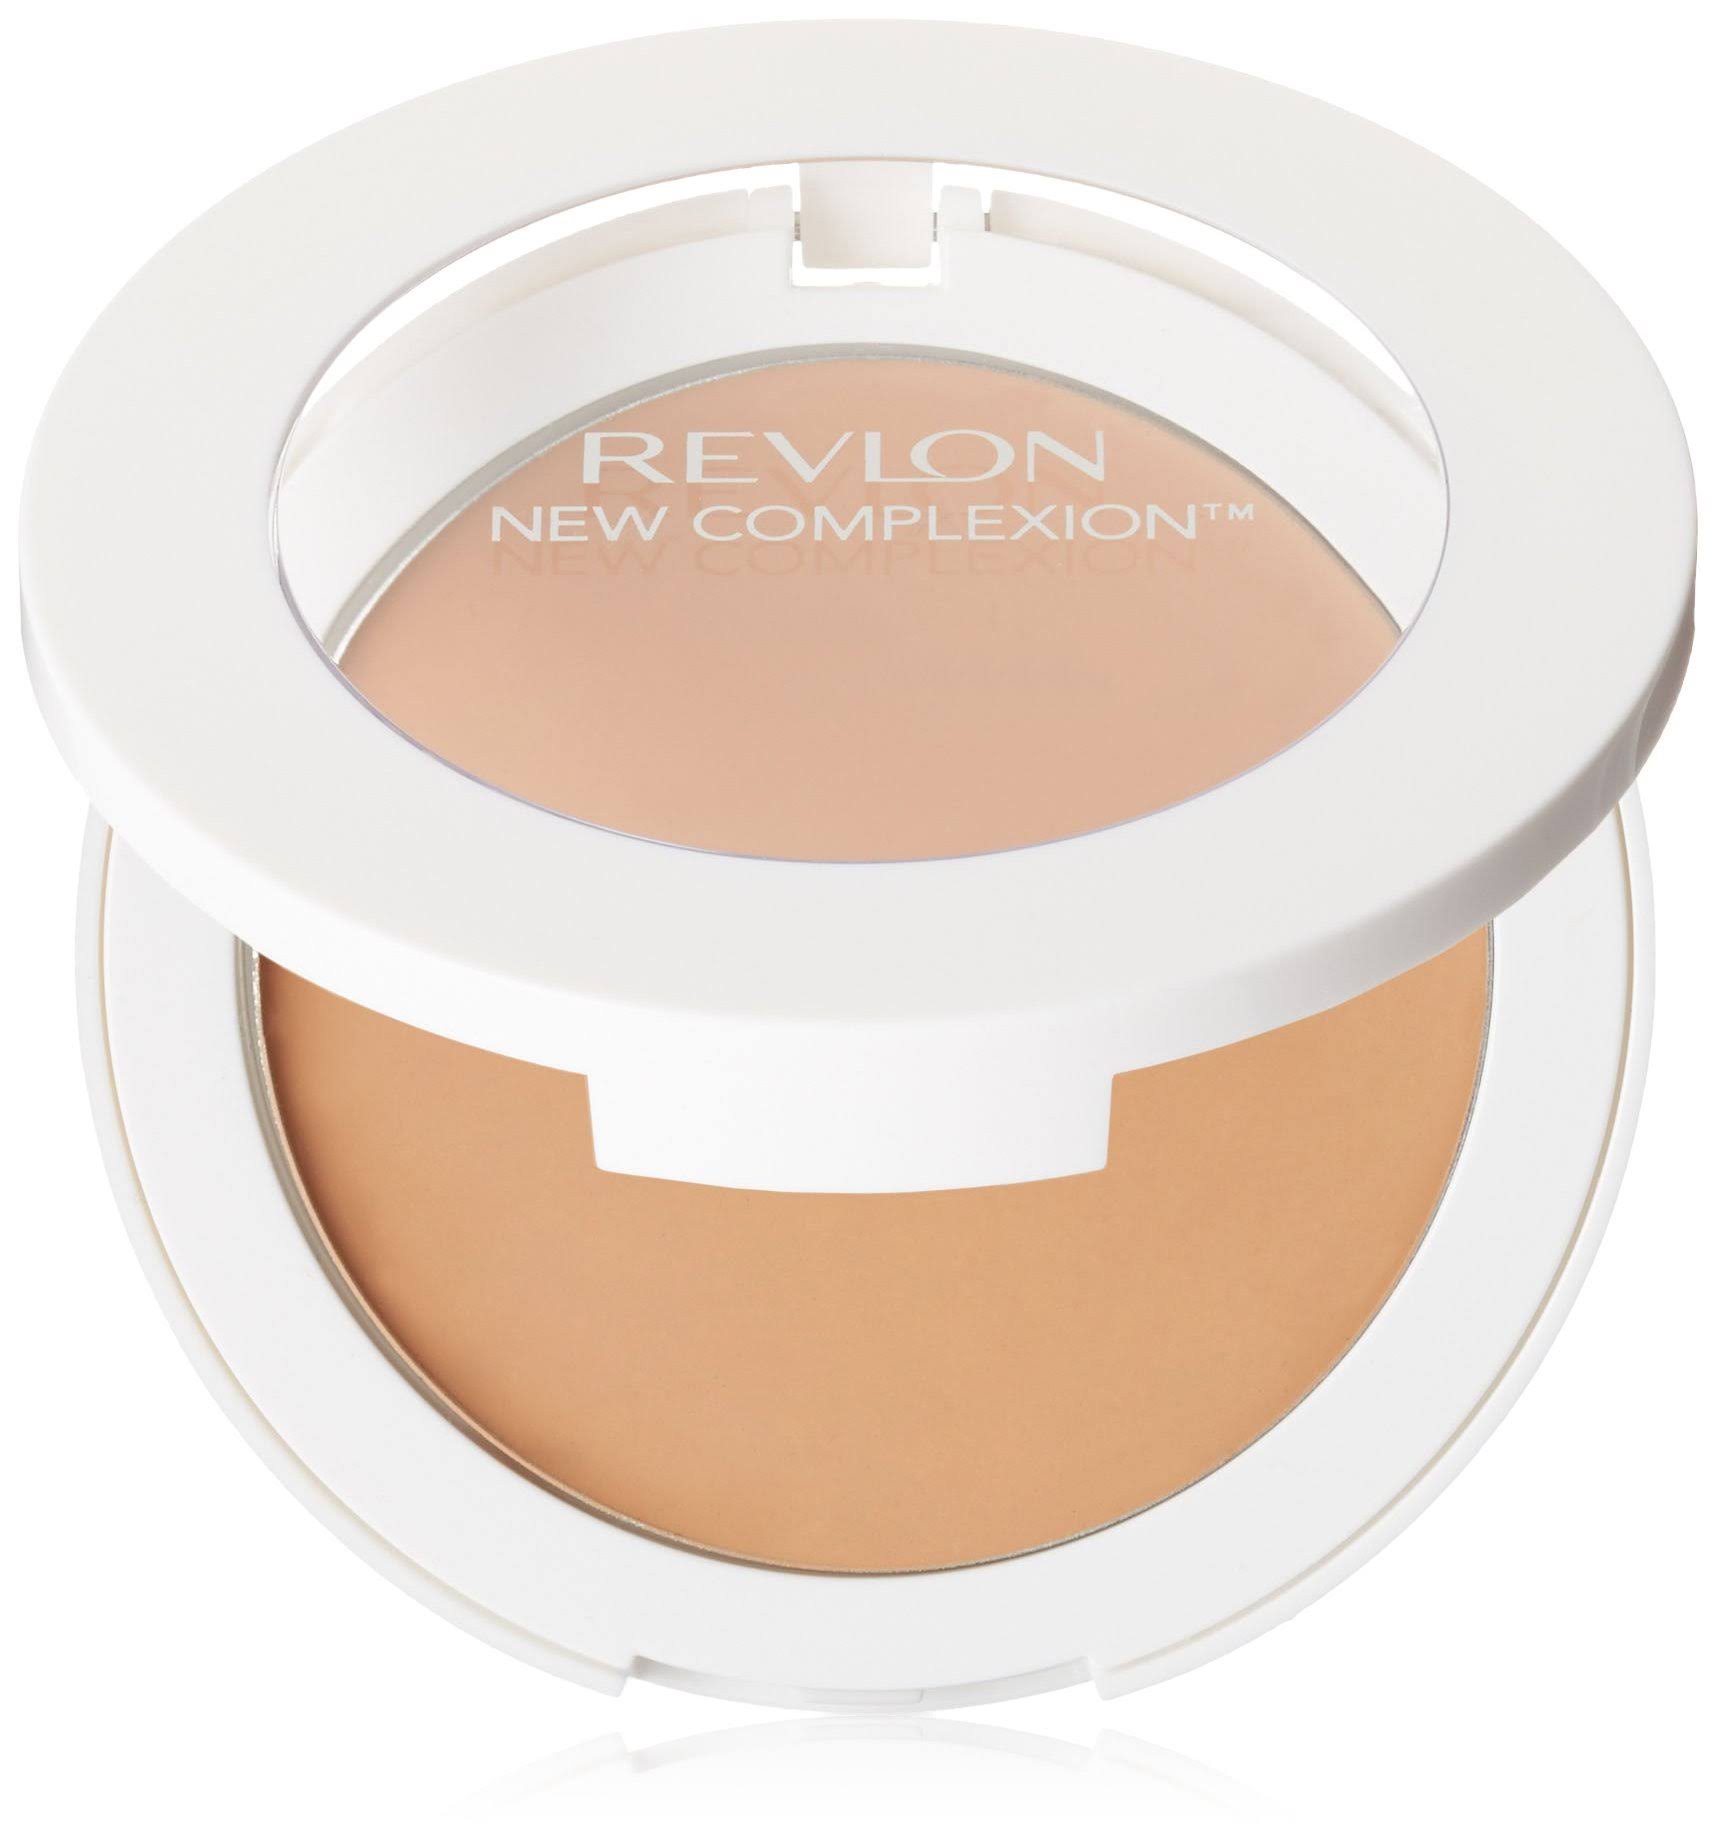 Revlon New Complexion One-Step Compact Makeup - SPF 15, Natural Beige, 04 .35oz